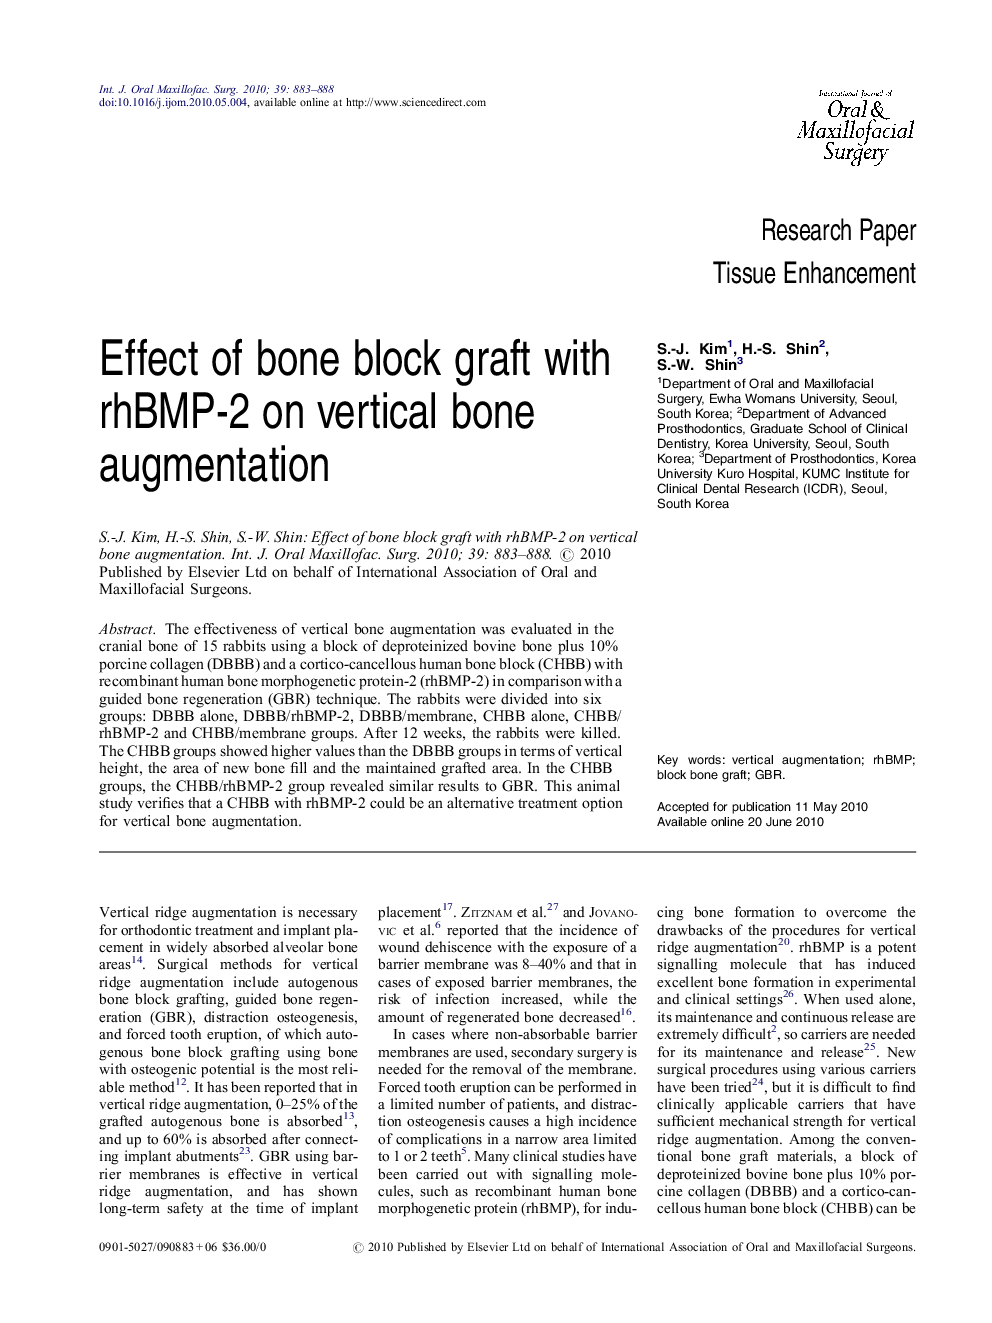 Effect of bone block graft with rhBMP-2 on vertical bone augmentation